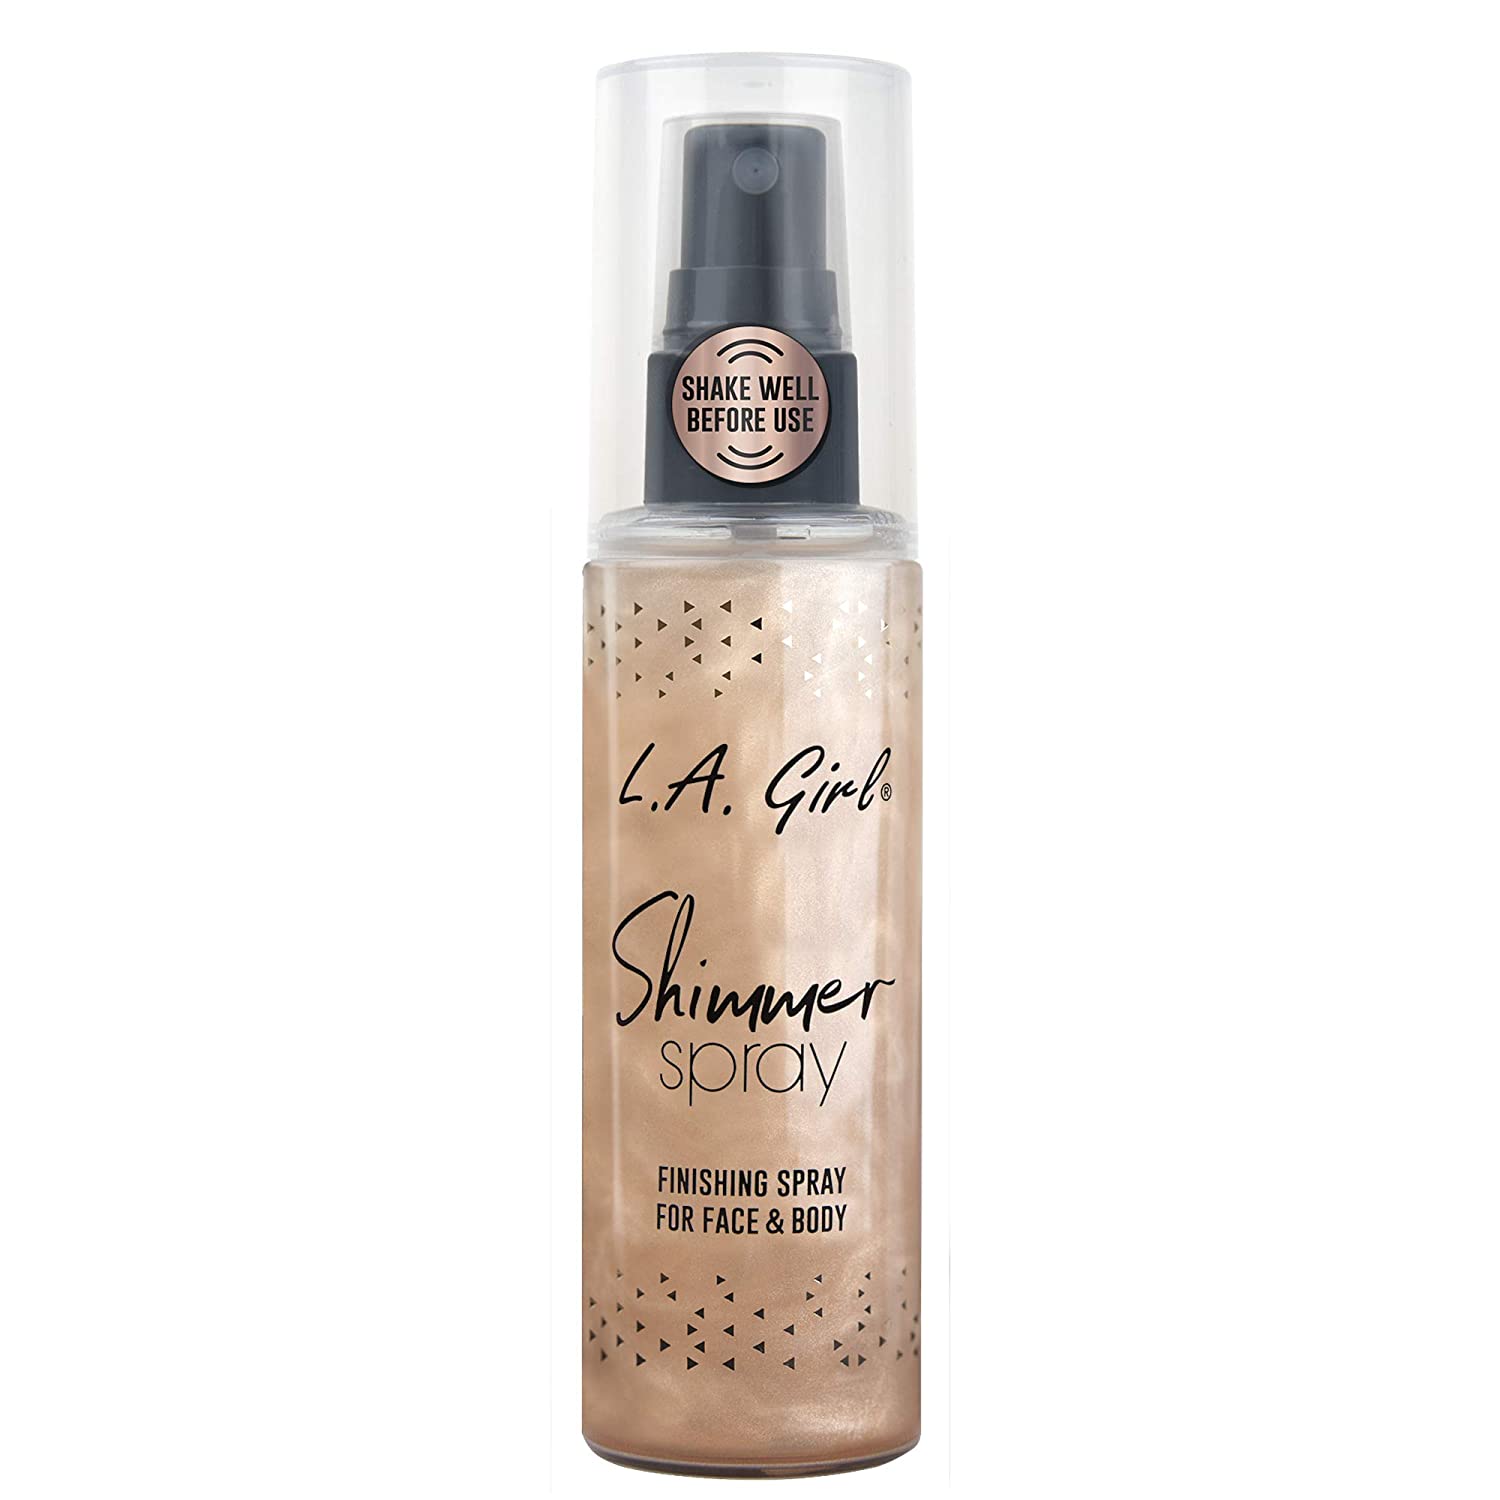 L.A. Girl Shimmer Spray - Rose Gold